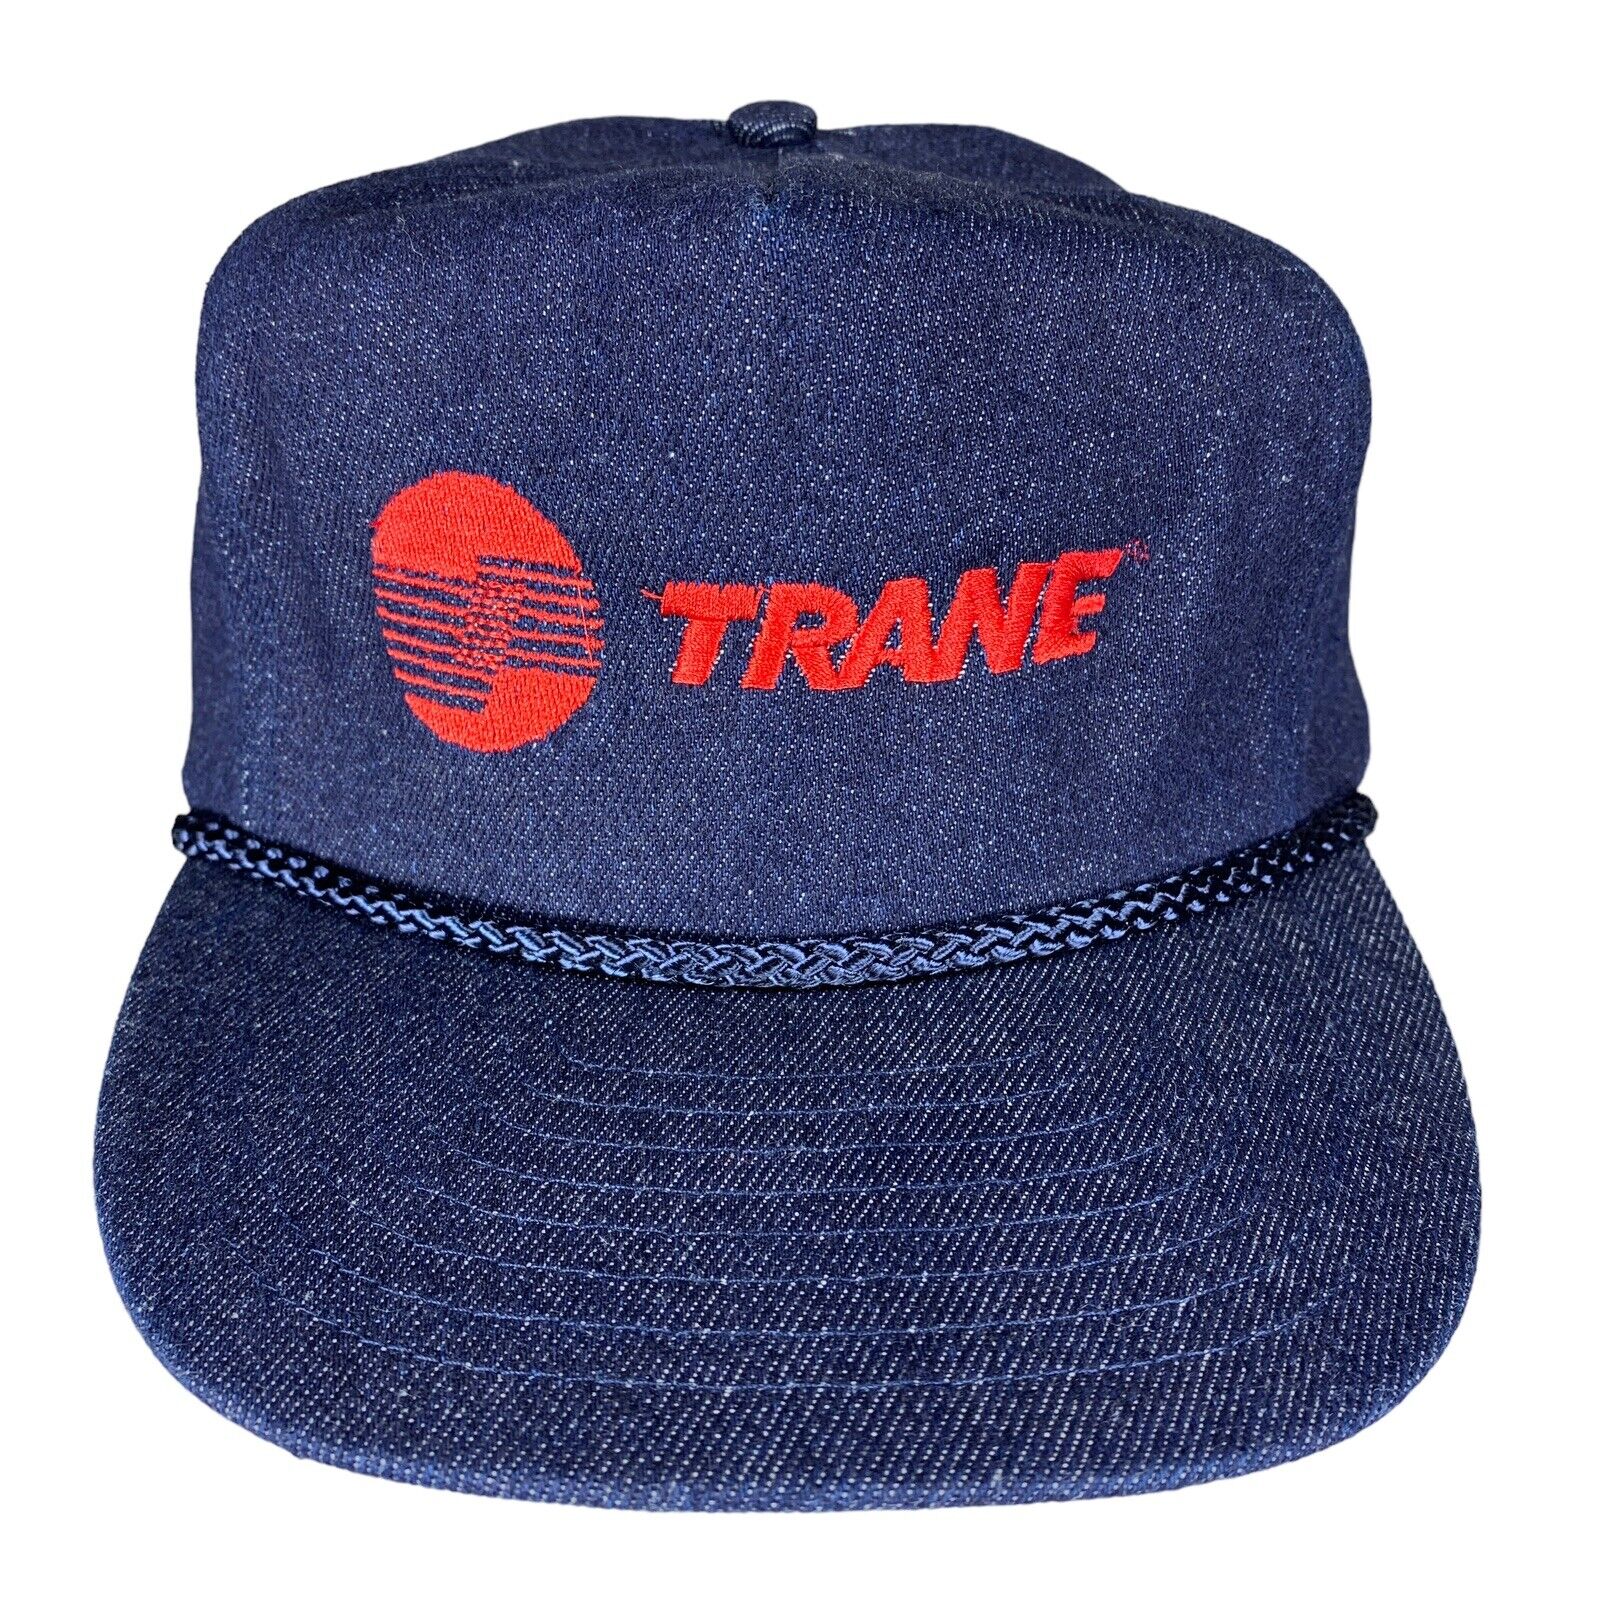 NWOT Vintage Trane HVAC Truckers Hat Cap Snap Back Braid Rope Blue Denim Nissin